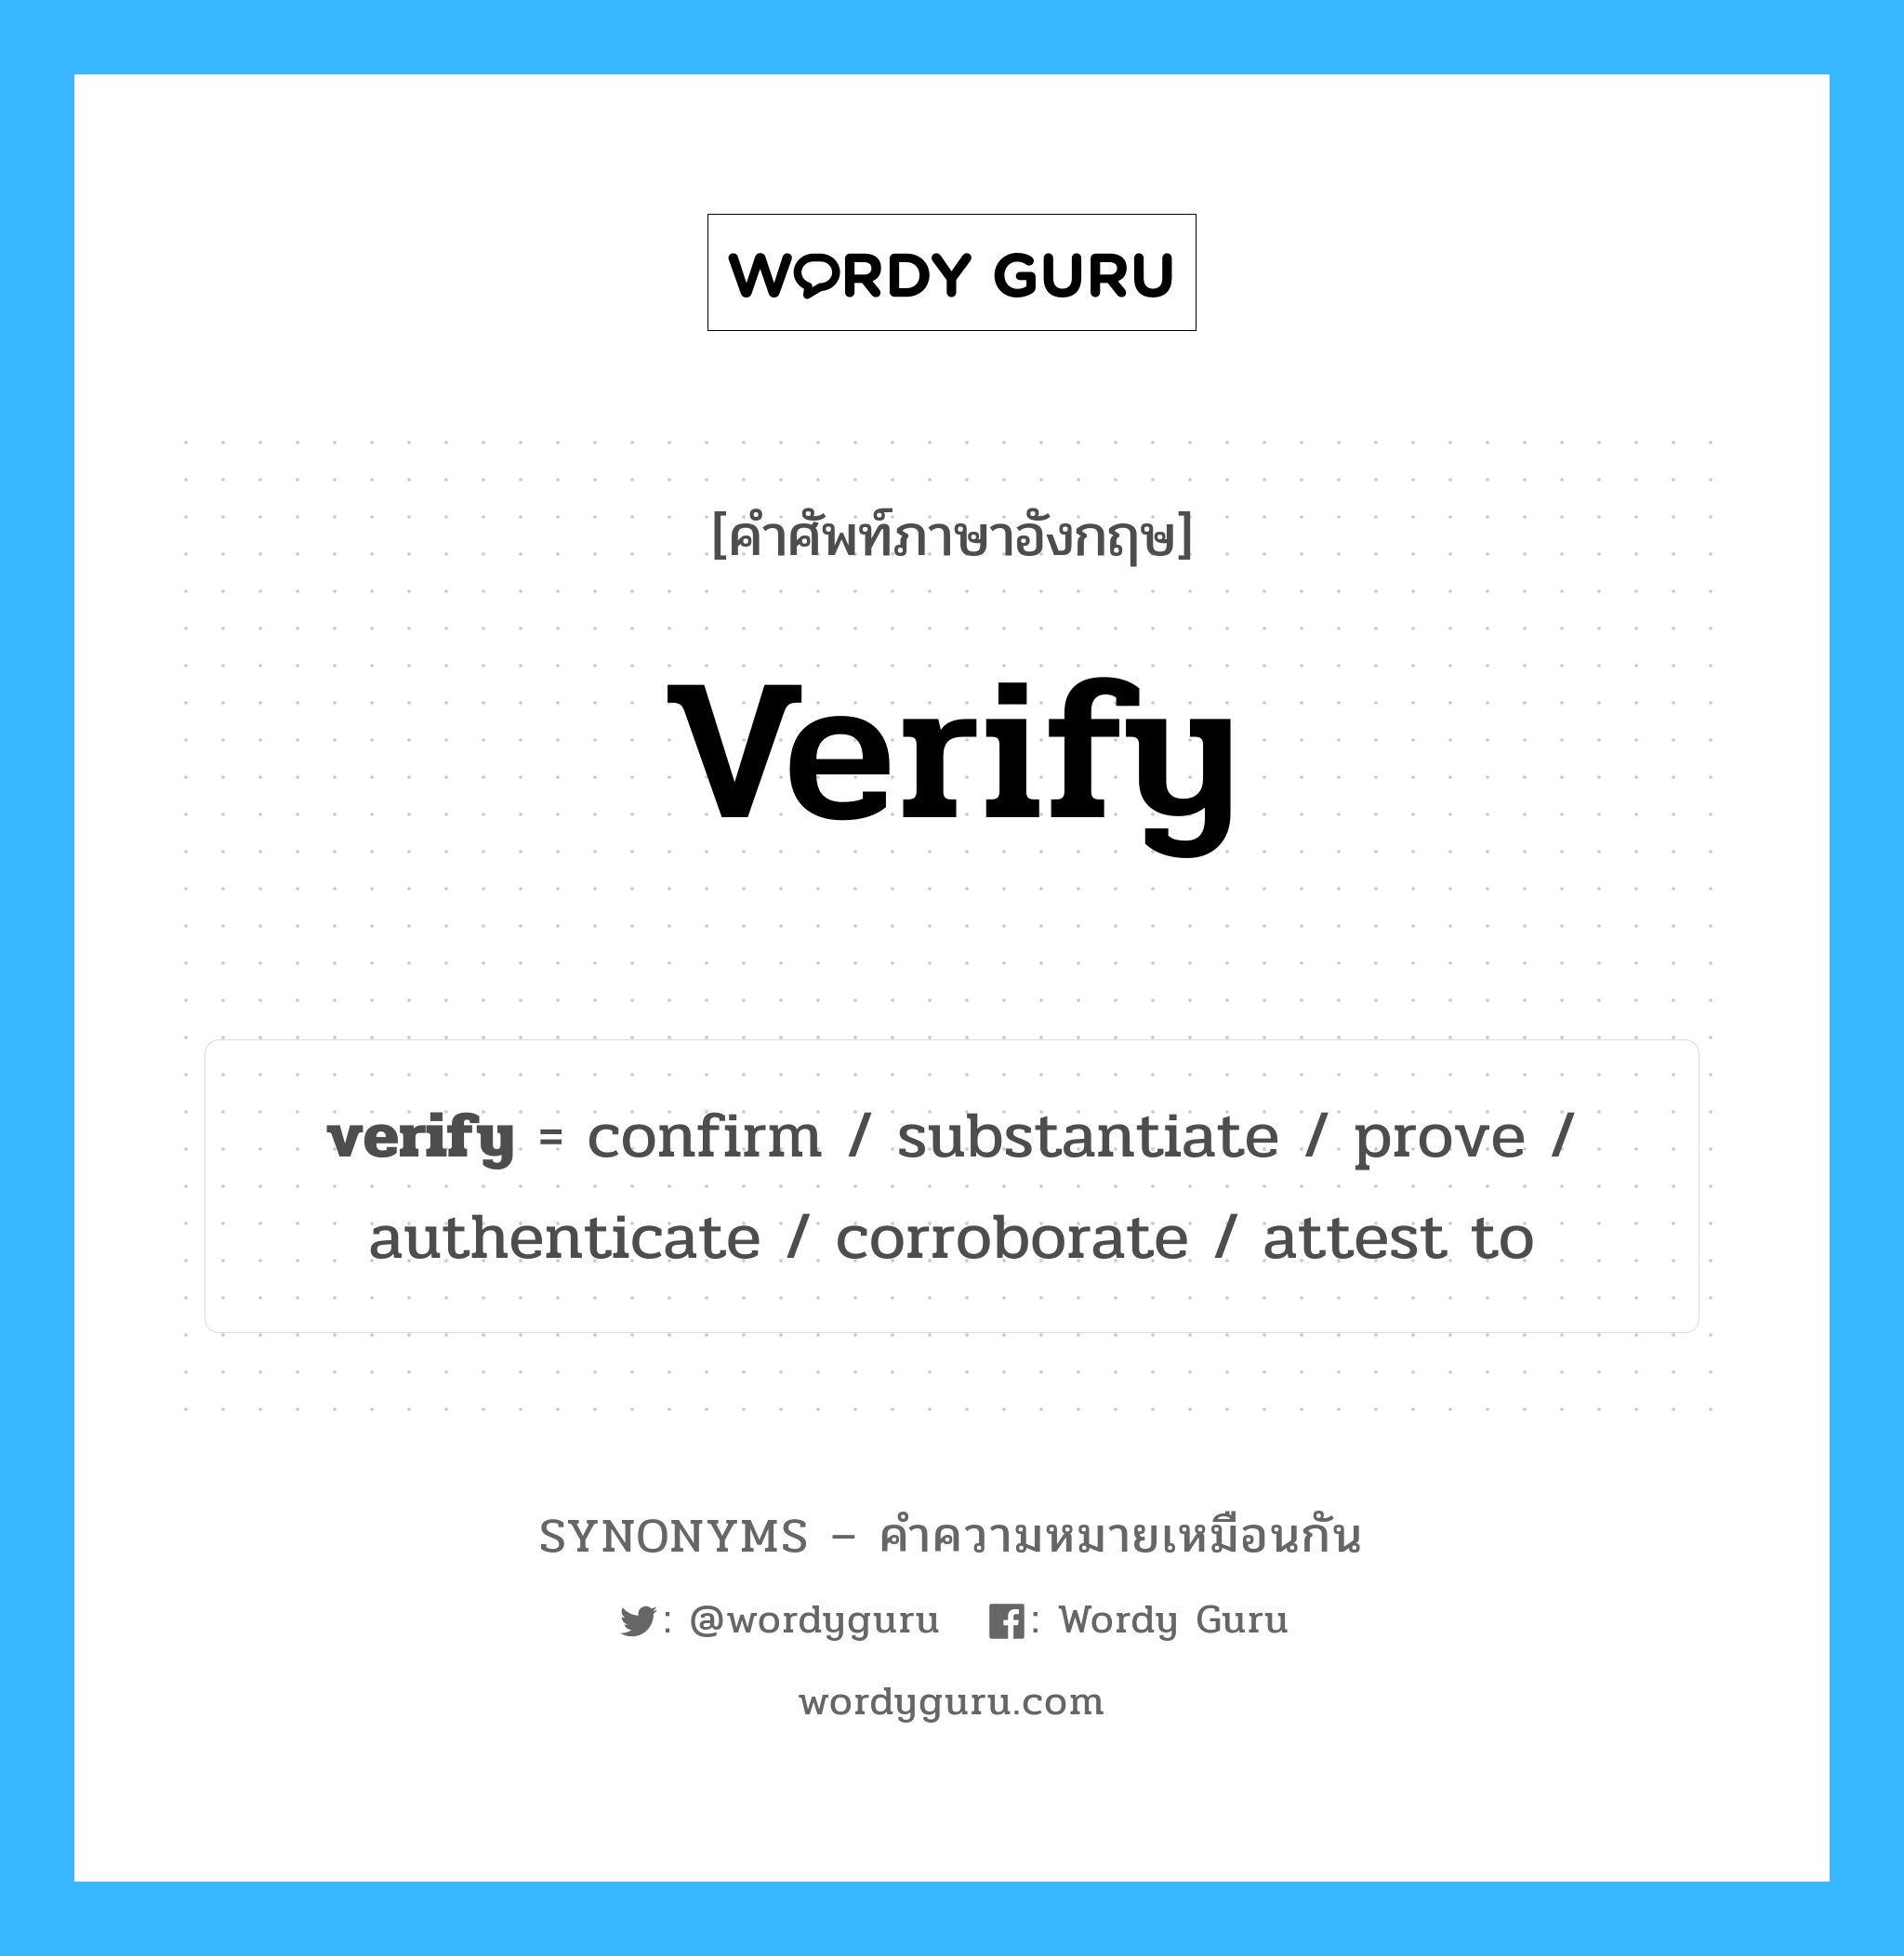 prove เป็นหนึ่งใน verify และมีคำอื่น ๆ อีกดังนี้, คำศัพท์ภาษาอังกฤษ prove ความหมายคล้ายกันกับ verify แปลว่า พิสูจน์ หมวด verify